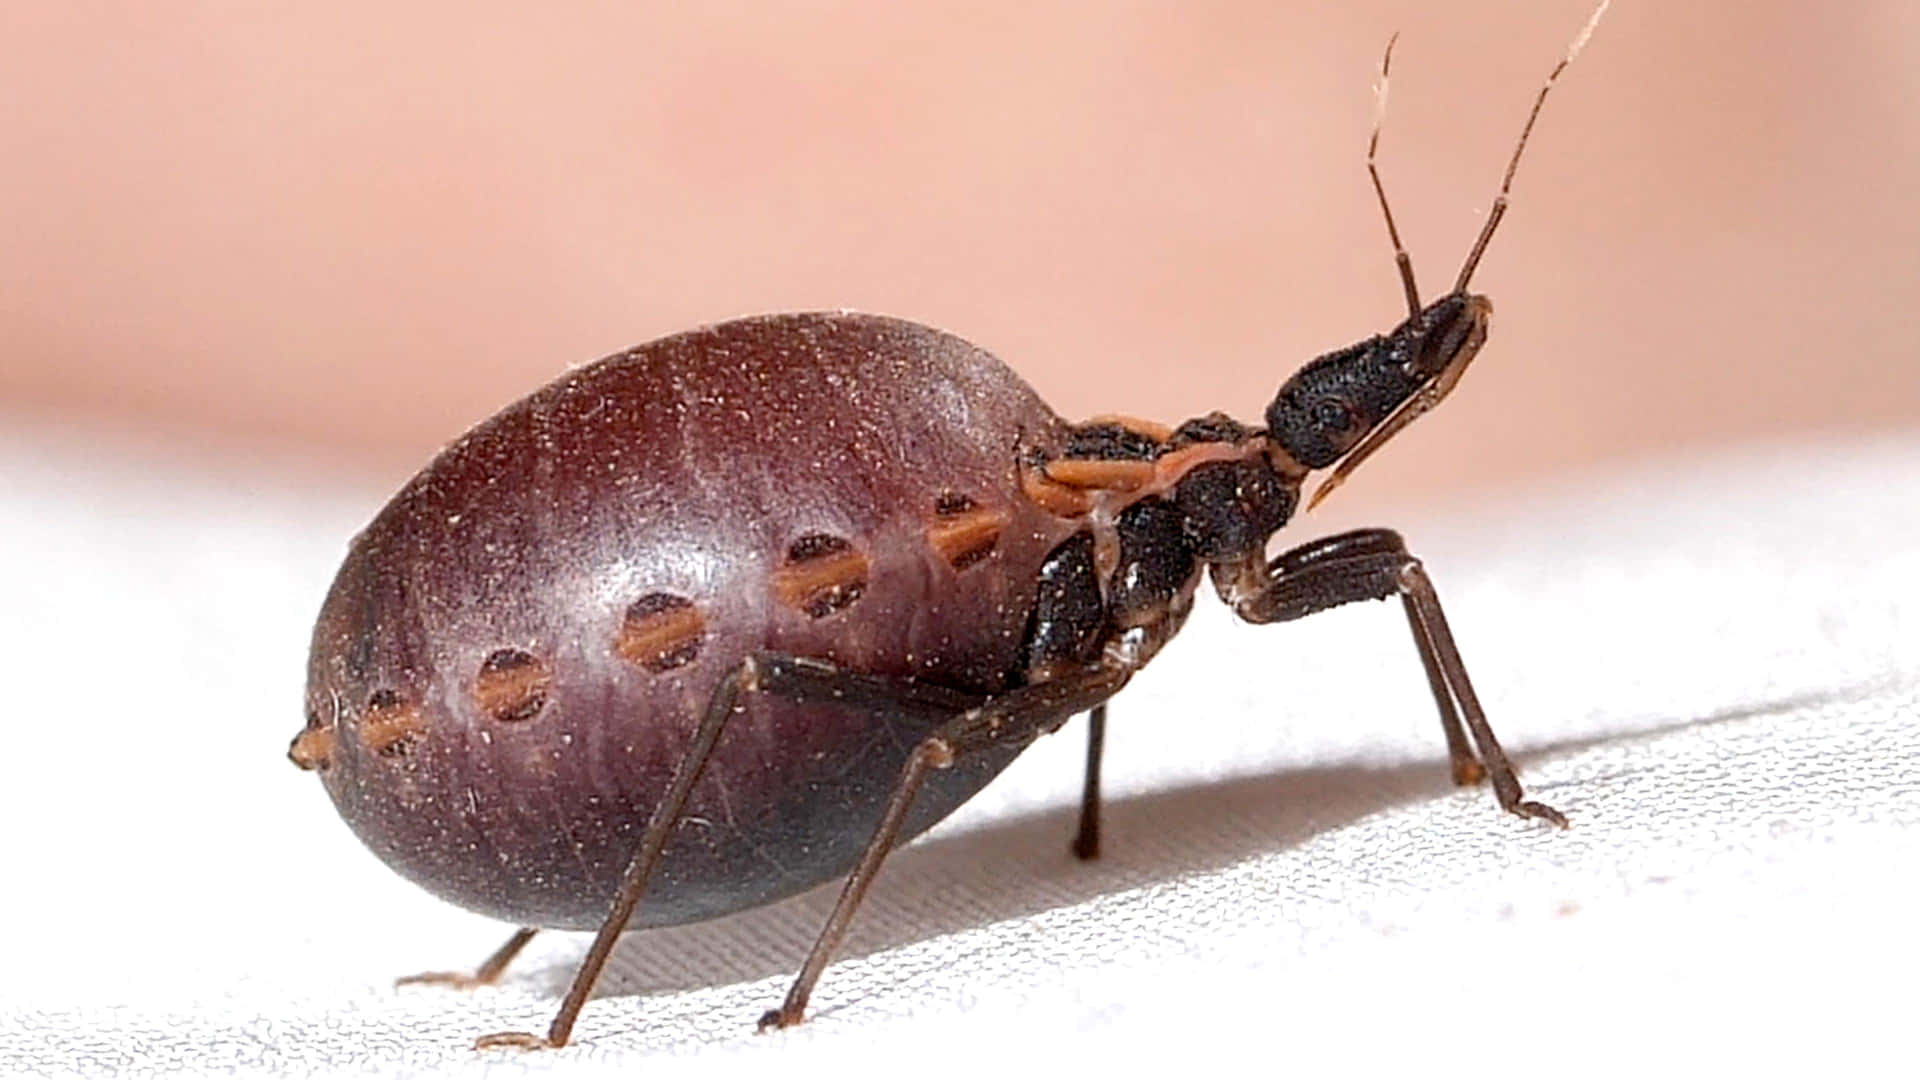 Intriguing close-up shot of an exotic bug